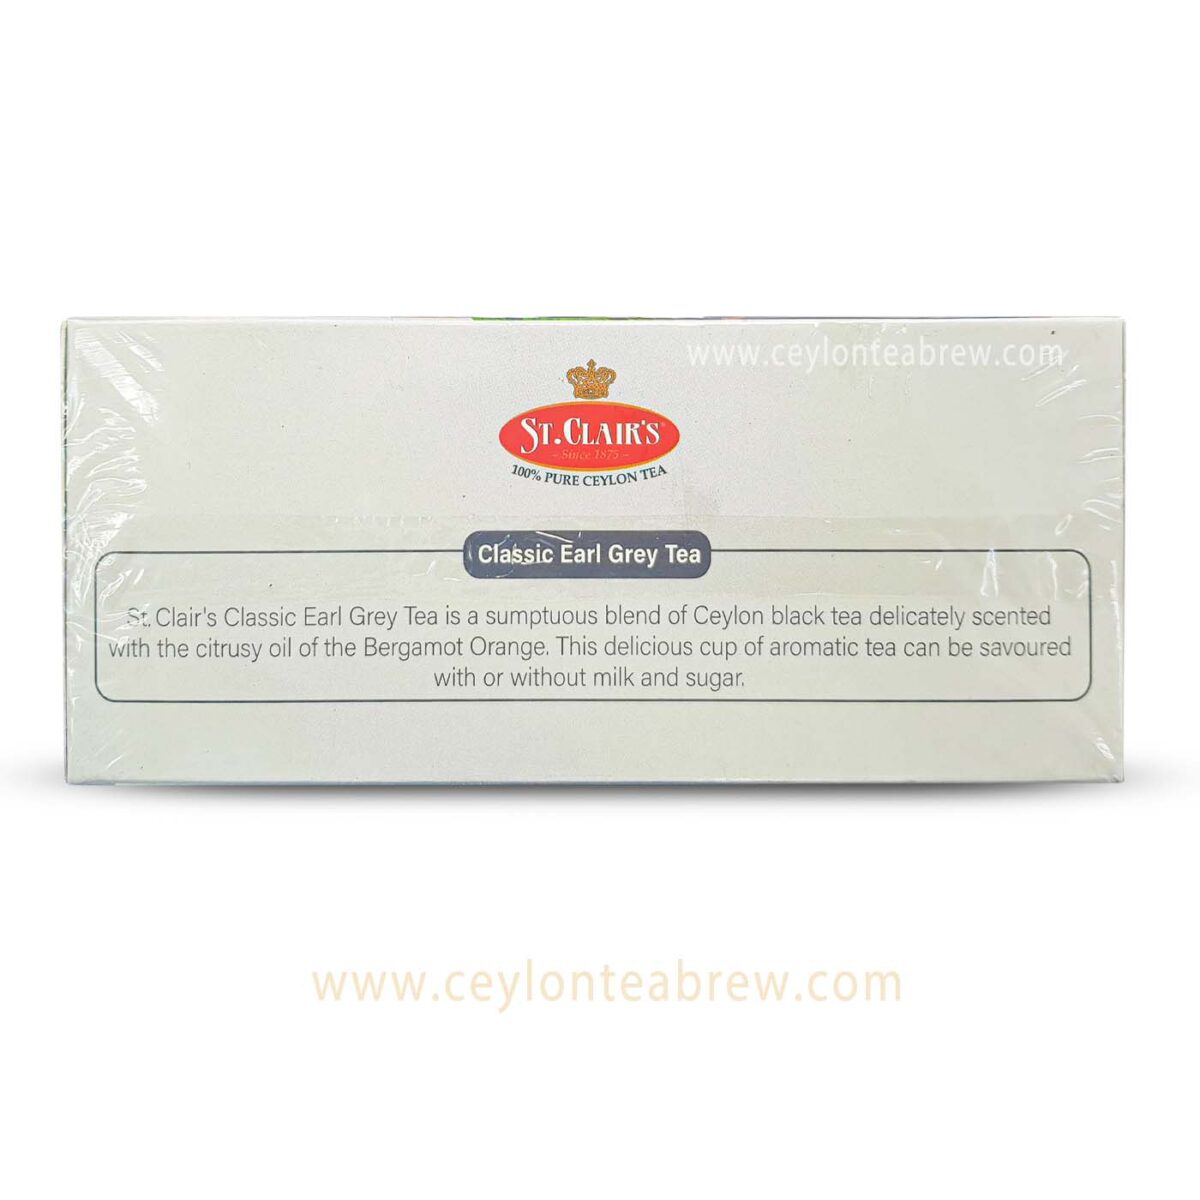 St Clair's Ceylon black tea classic earl grey tea bags 100